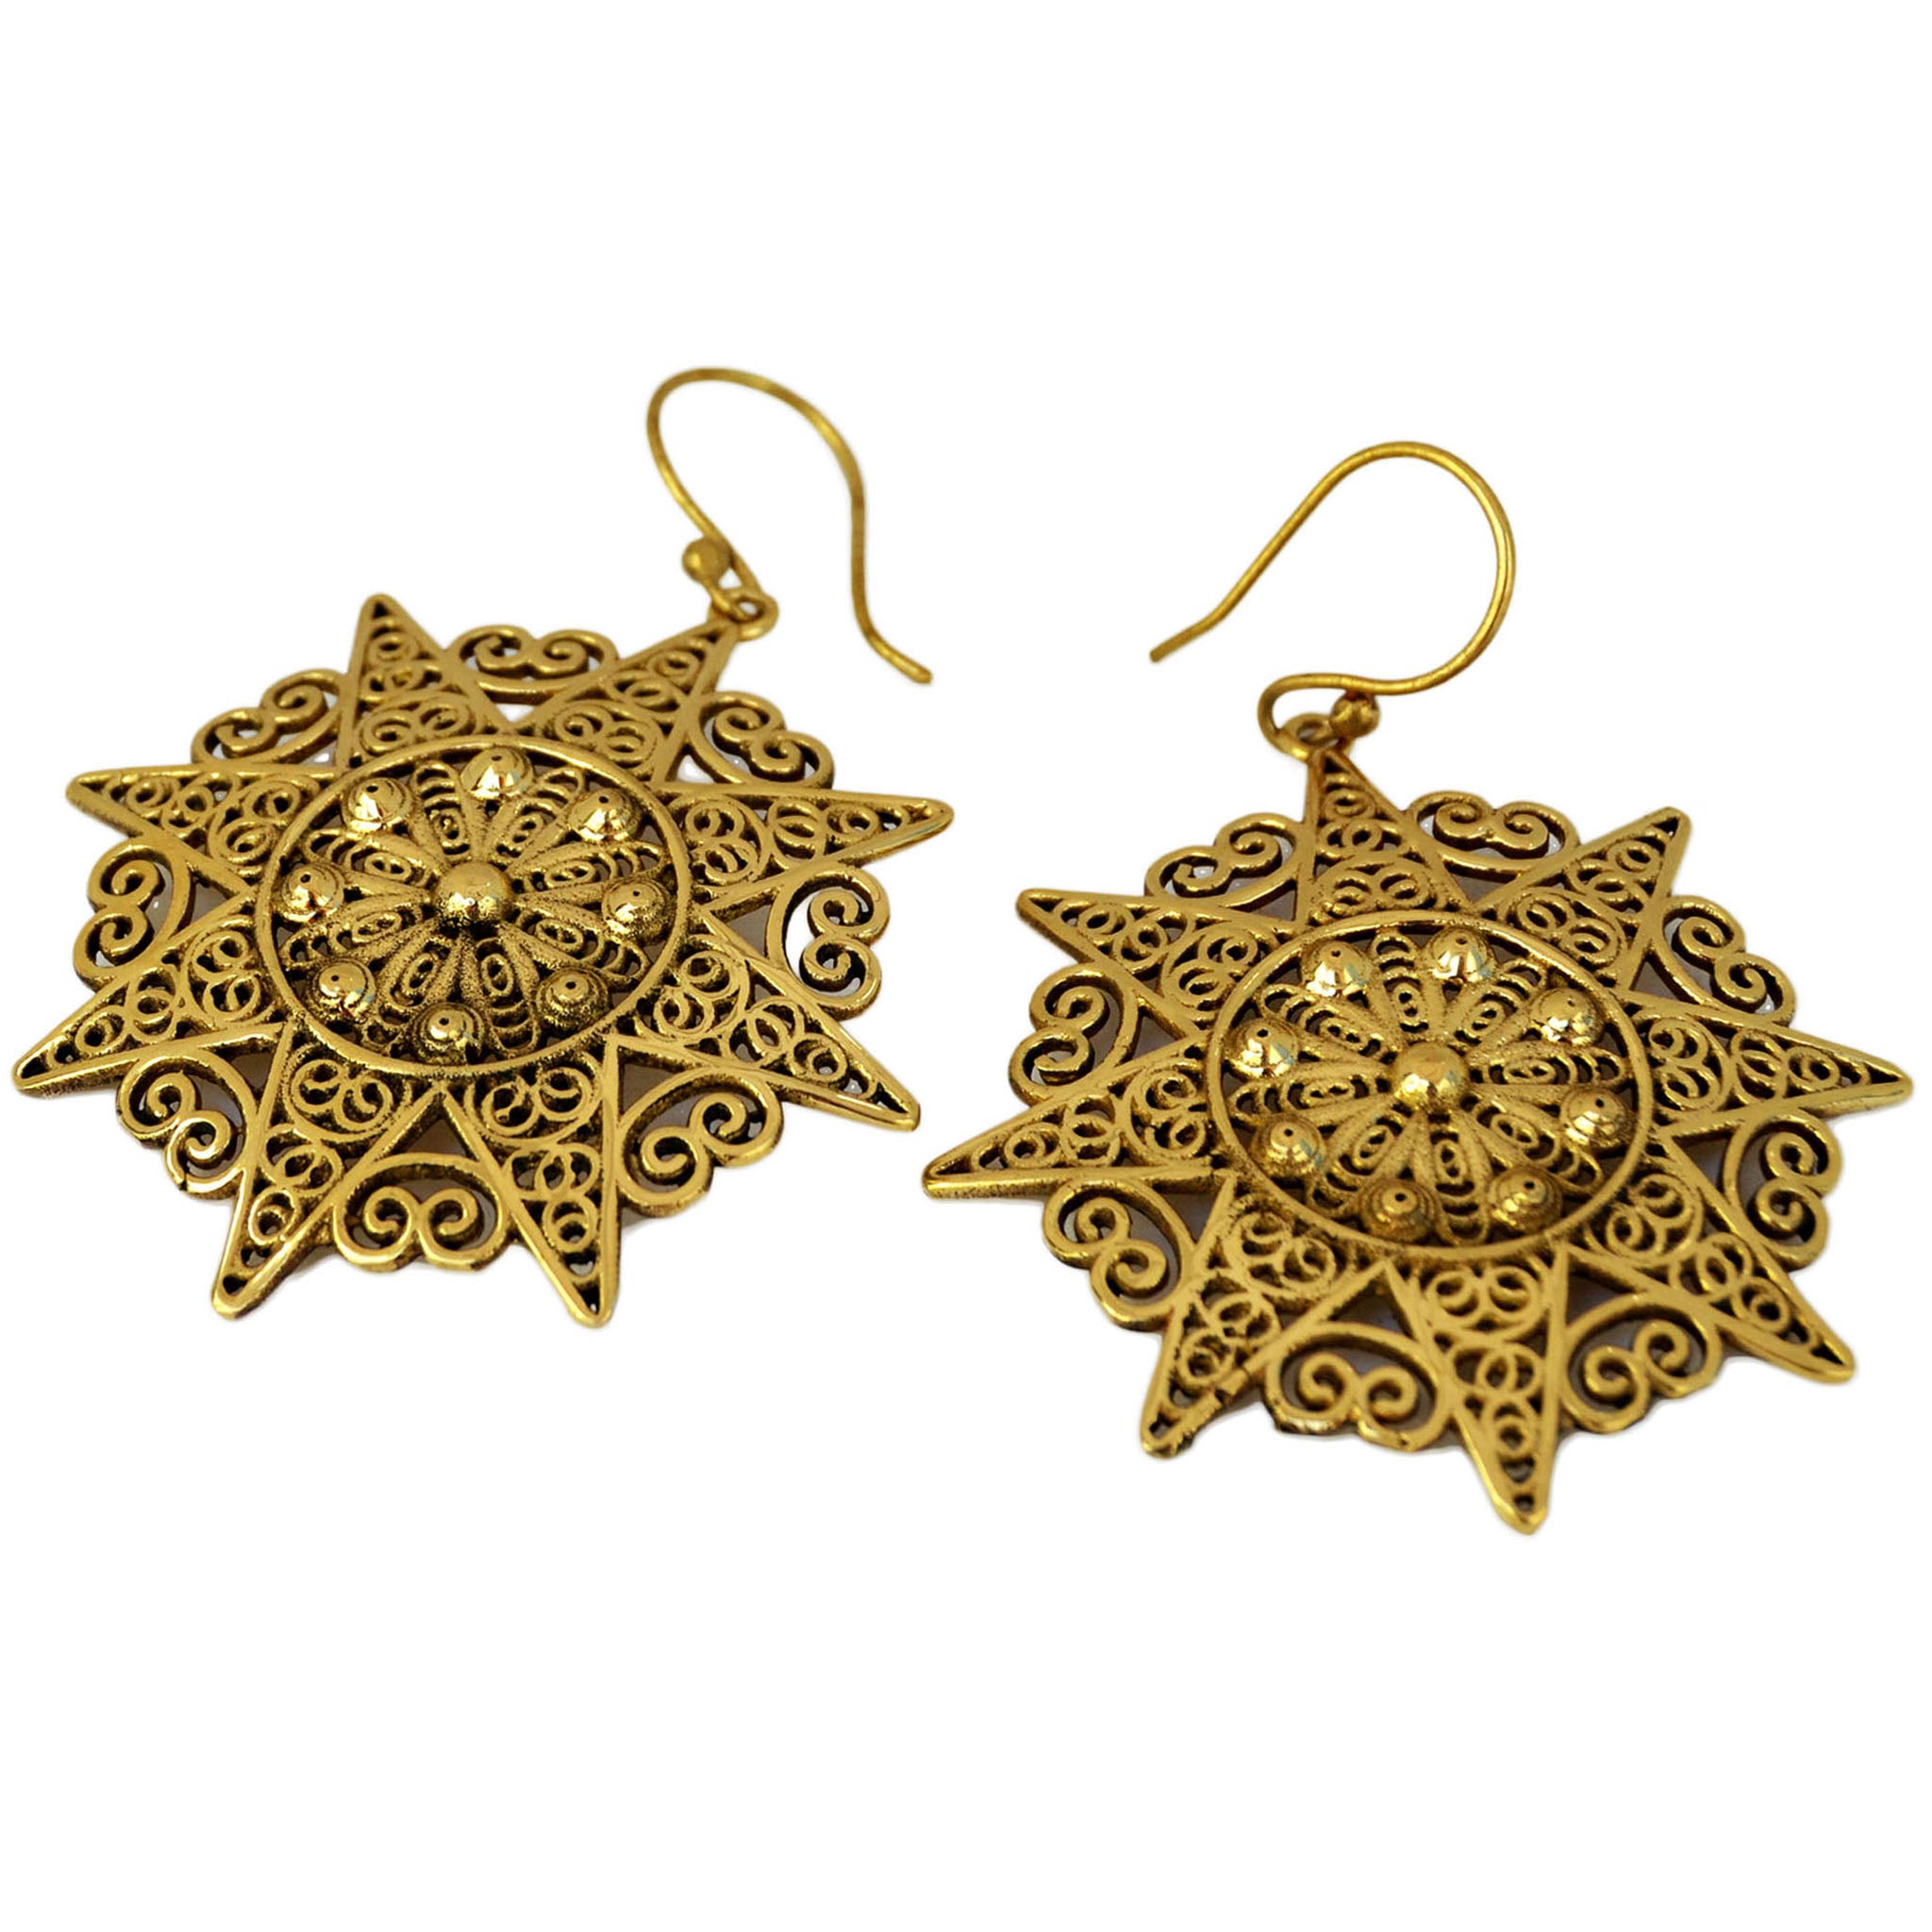 Golden filigree mandala earrings